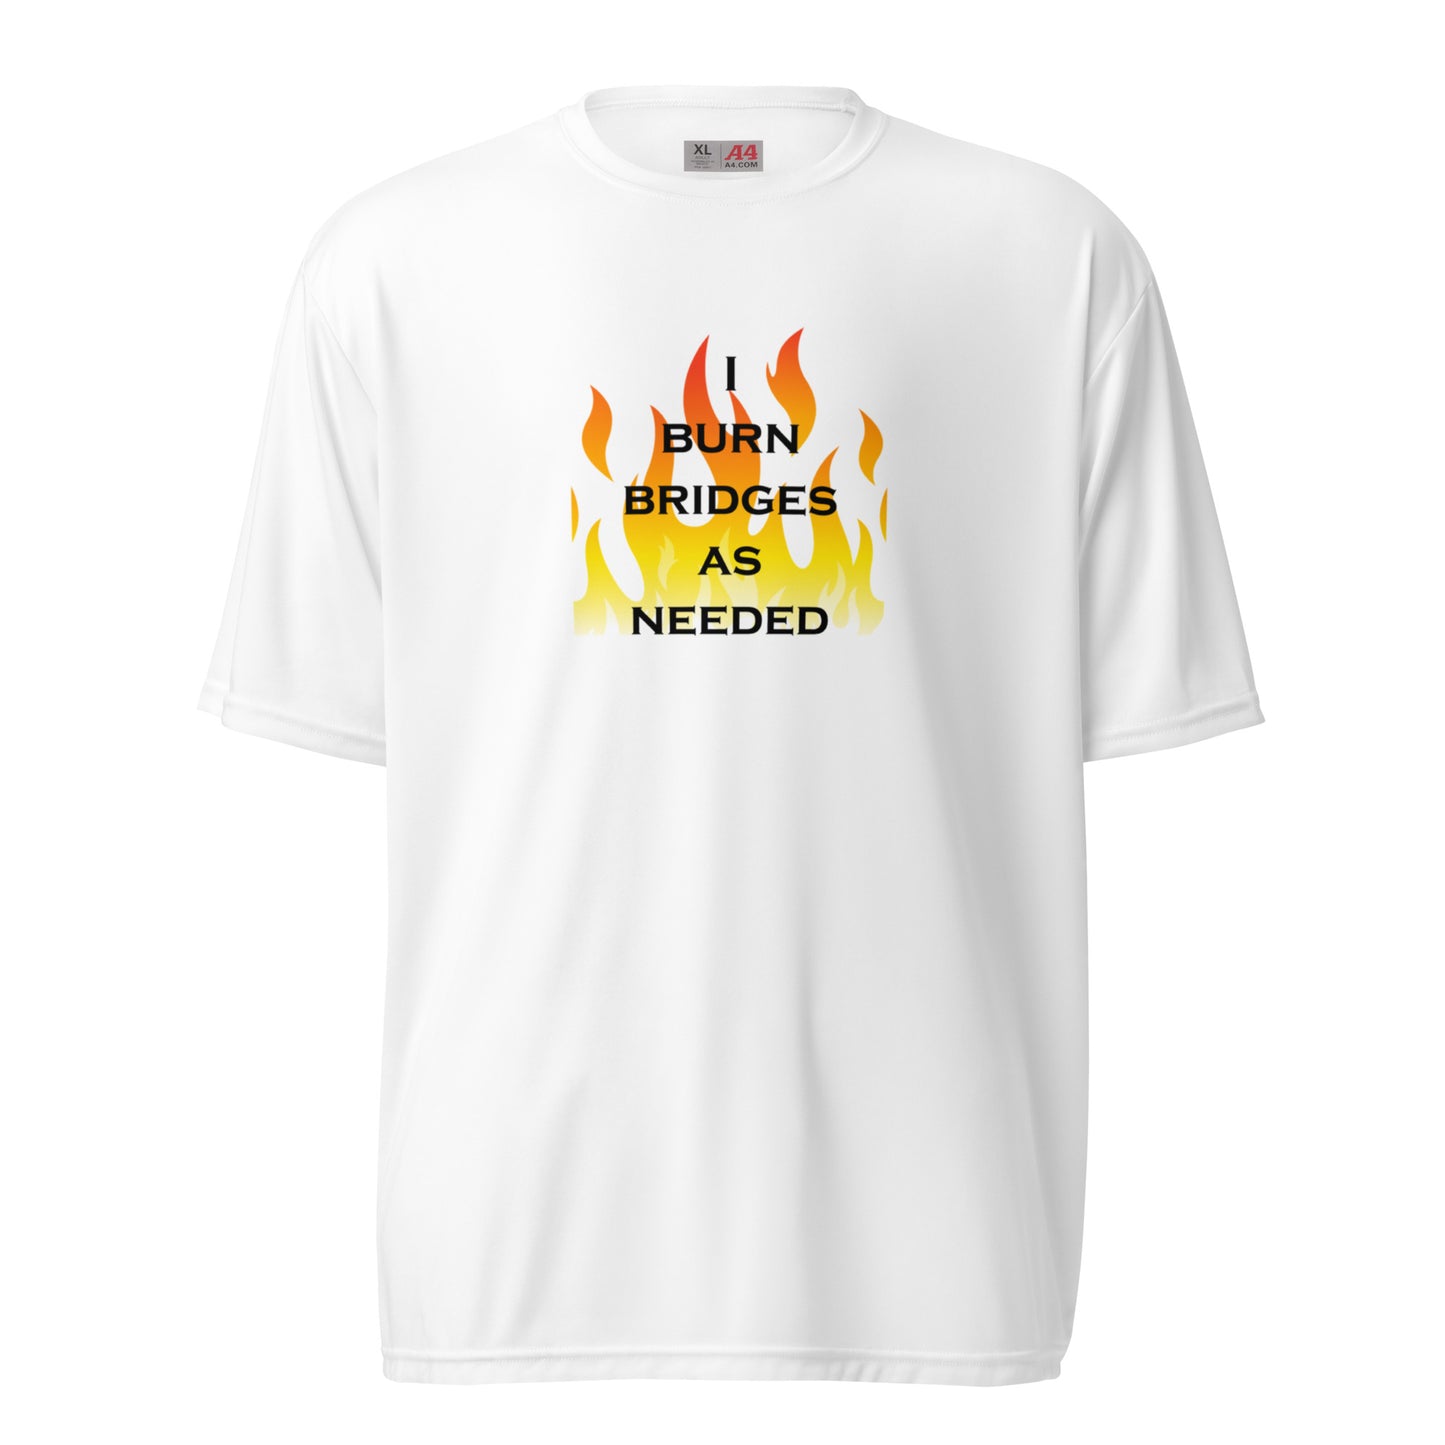 I Burn Bridges Unisex performance crew neck t-shirt